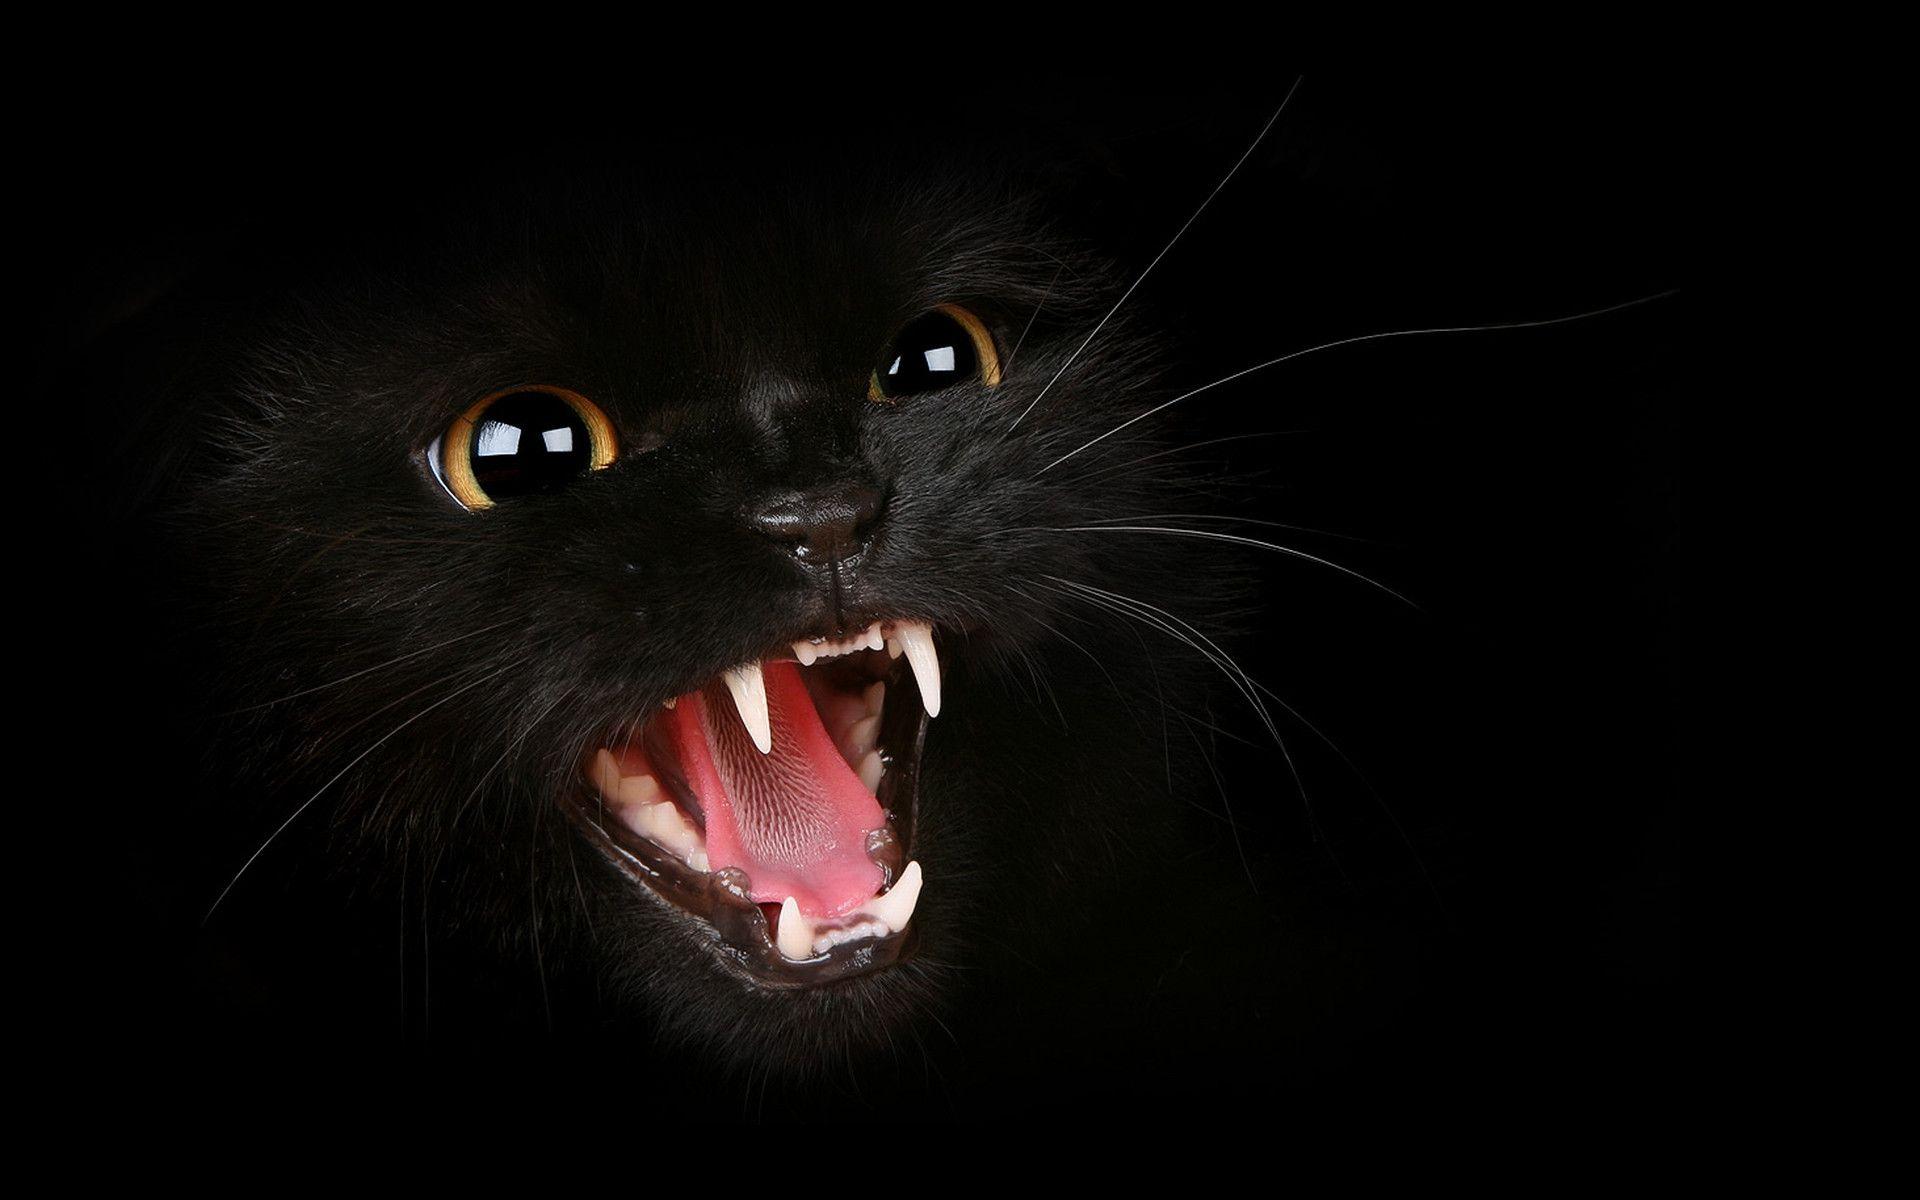 Black Cat HD Wallpaper. Black Cat Image